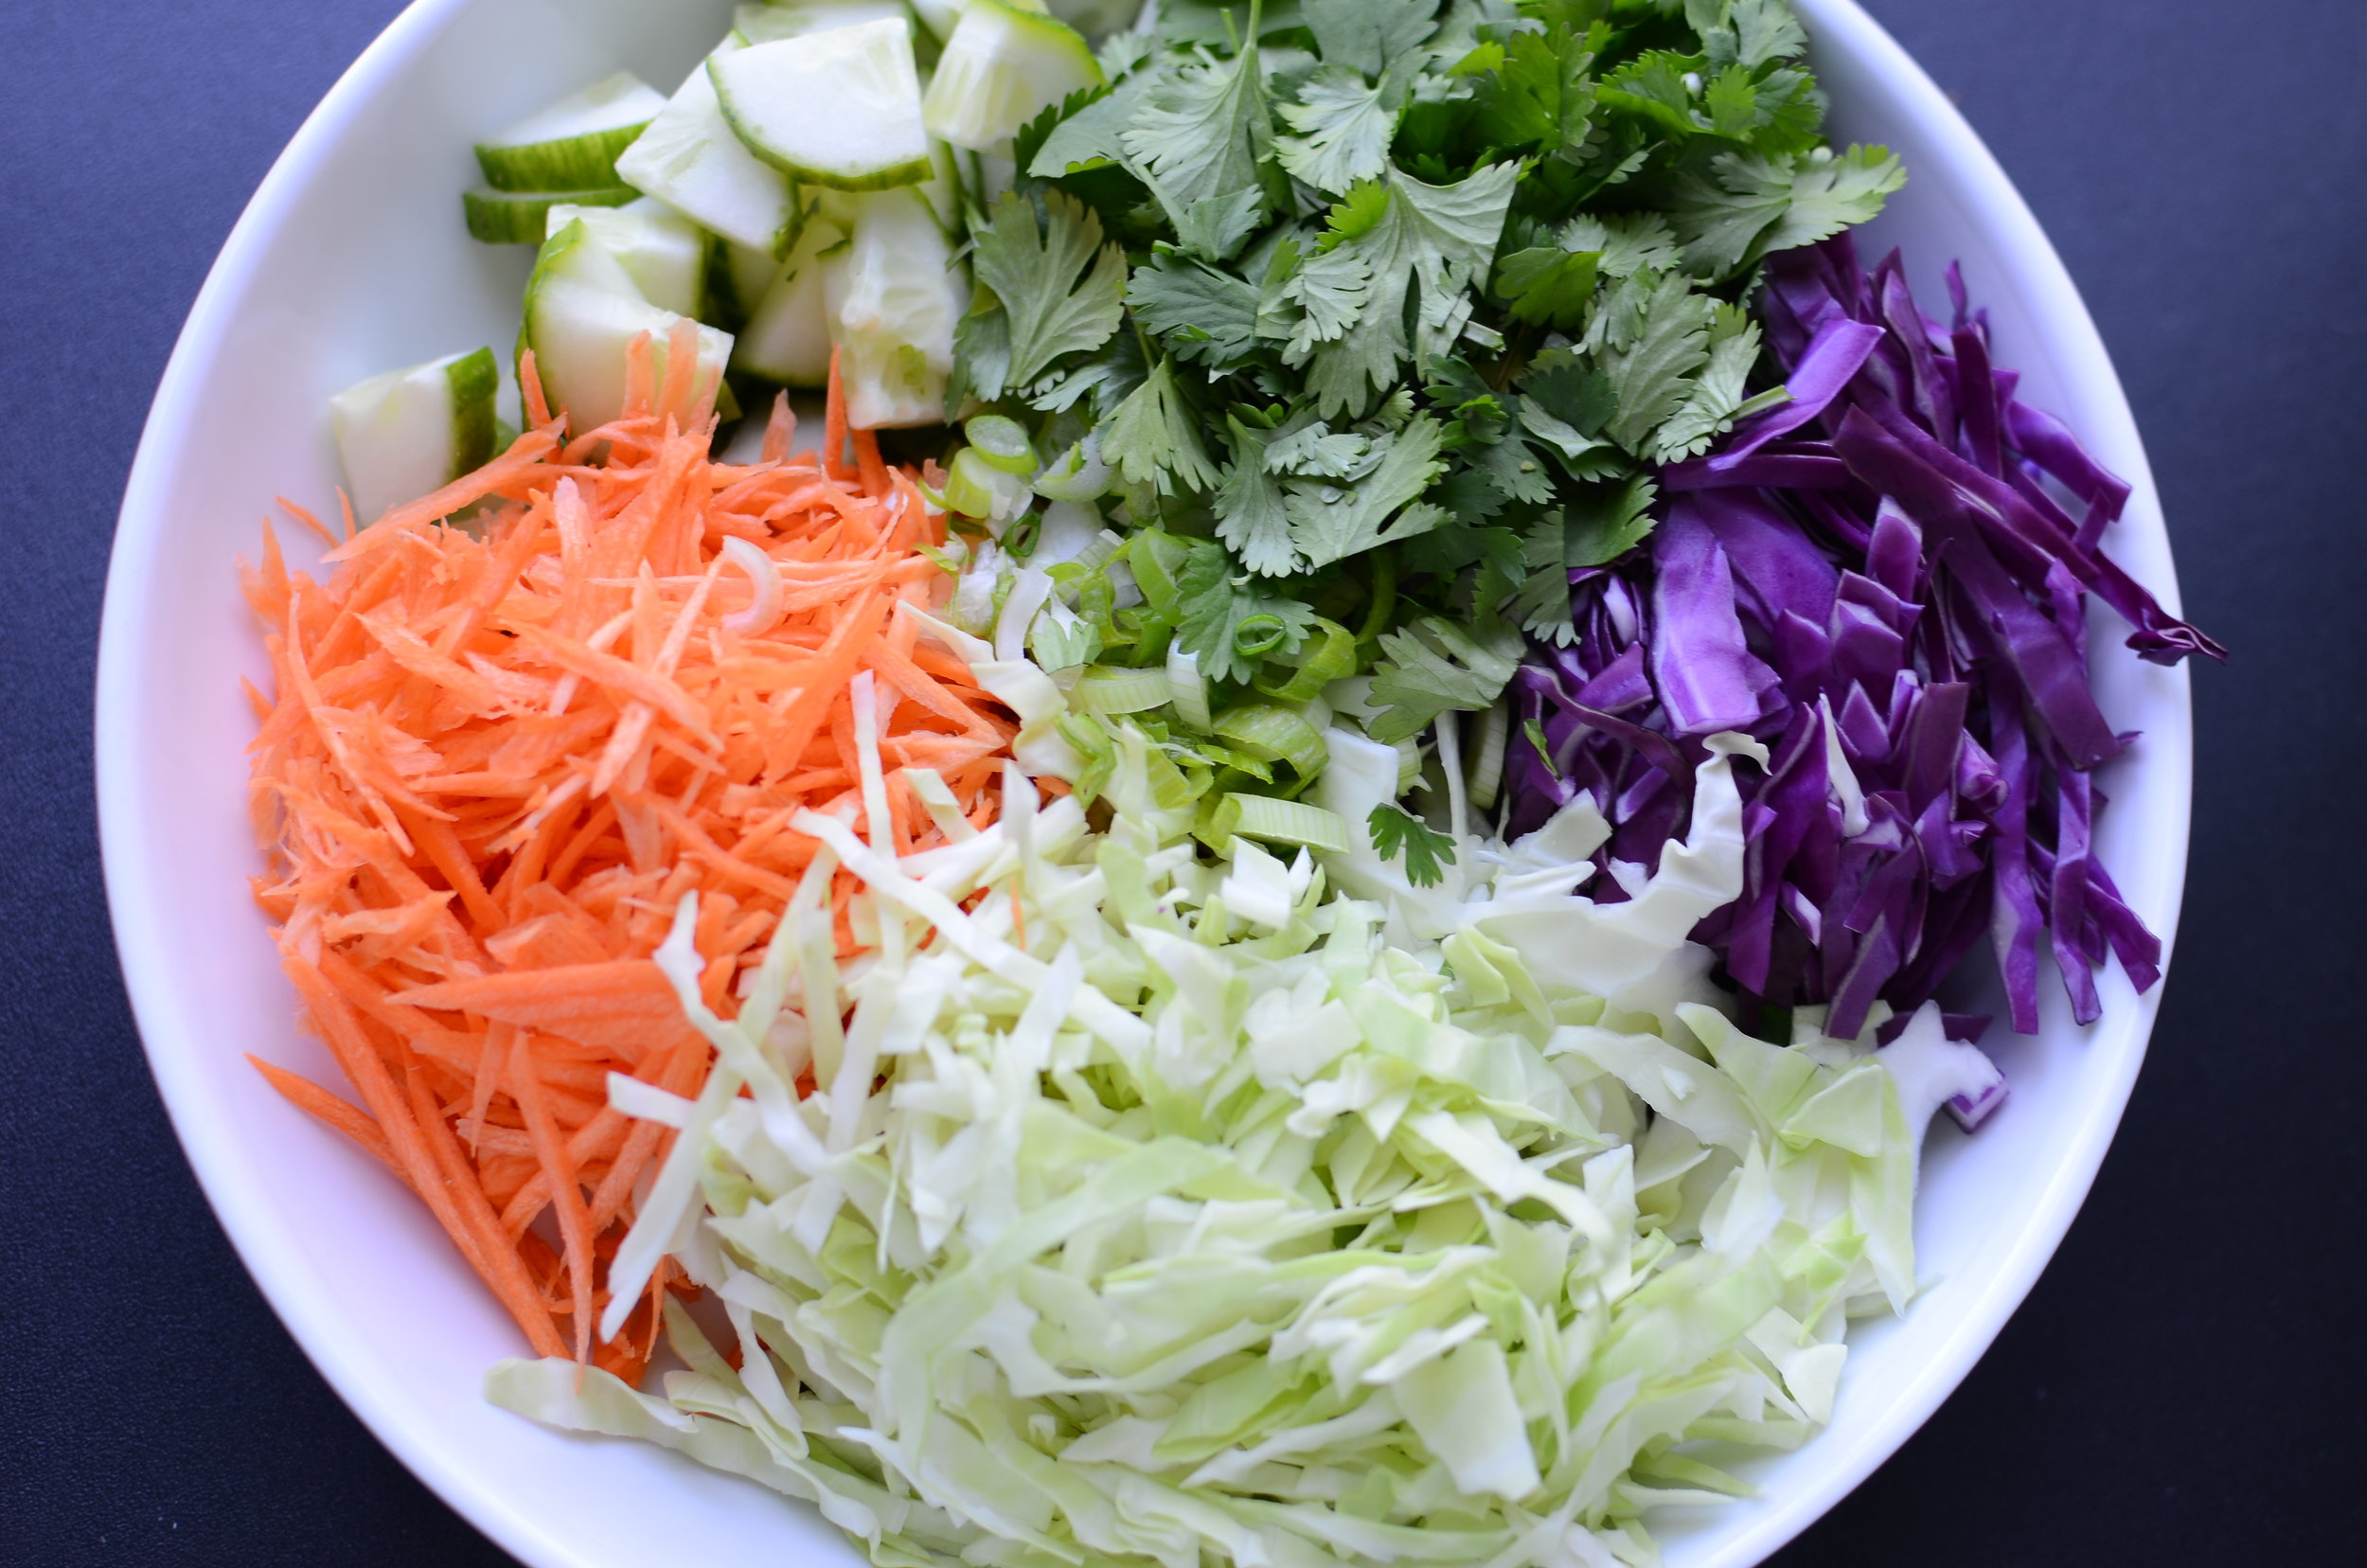 https://images.squarespace-cdn.com/content/v1/533f584fe4b0f77e1bd2e4d1/1558879795551-L1OKQMPDEUDWU6EYNXHC/thai-zoodle-salad-recipe-ingredients-butteryum